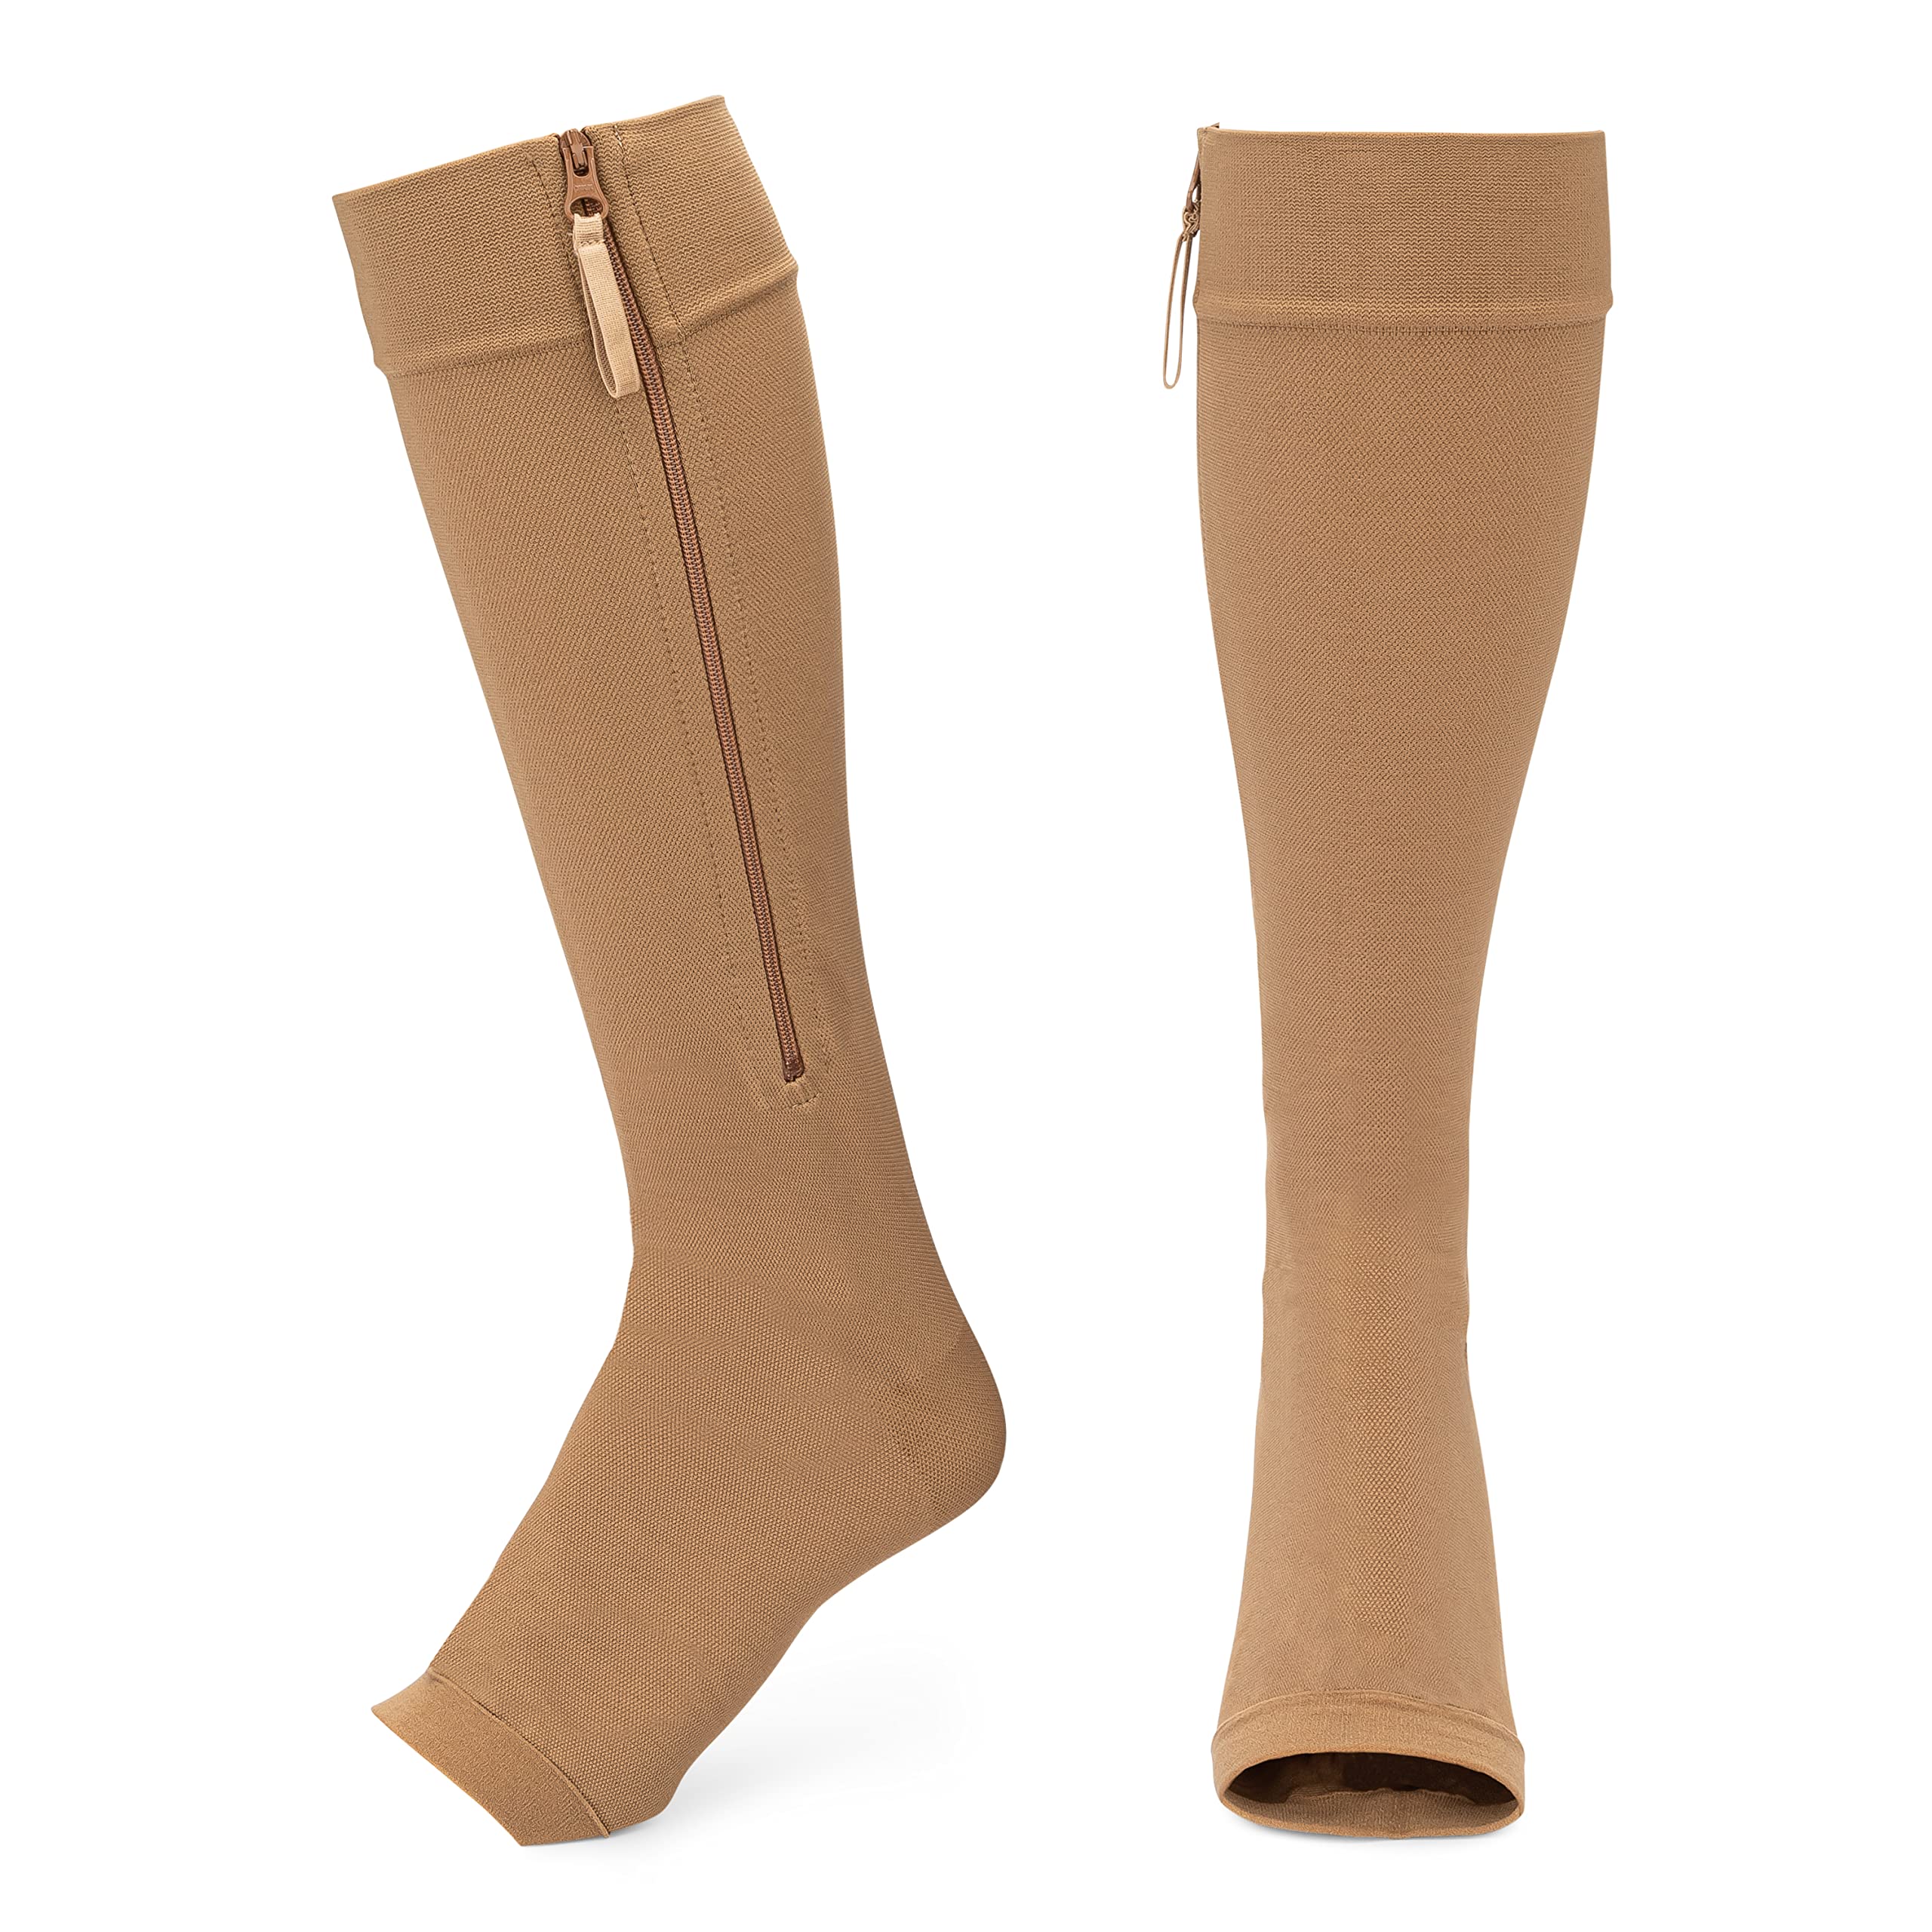 Shorewood Medical Zipper Compression Socks. 20-30mmHg. Knee Length. Size Medium. Beige